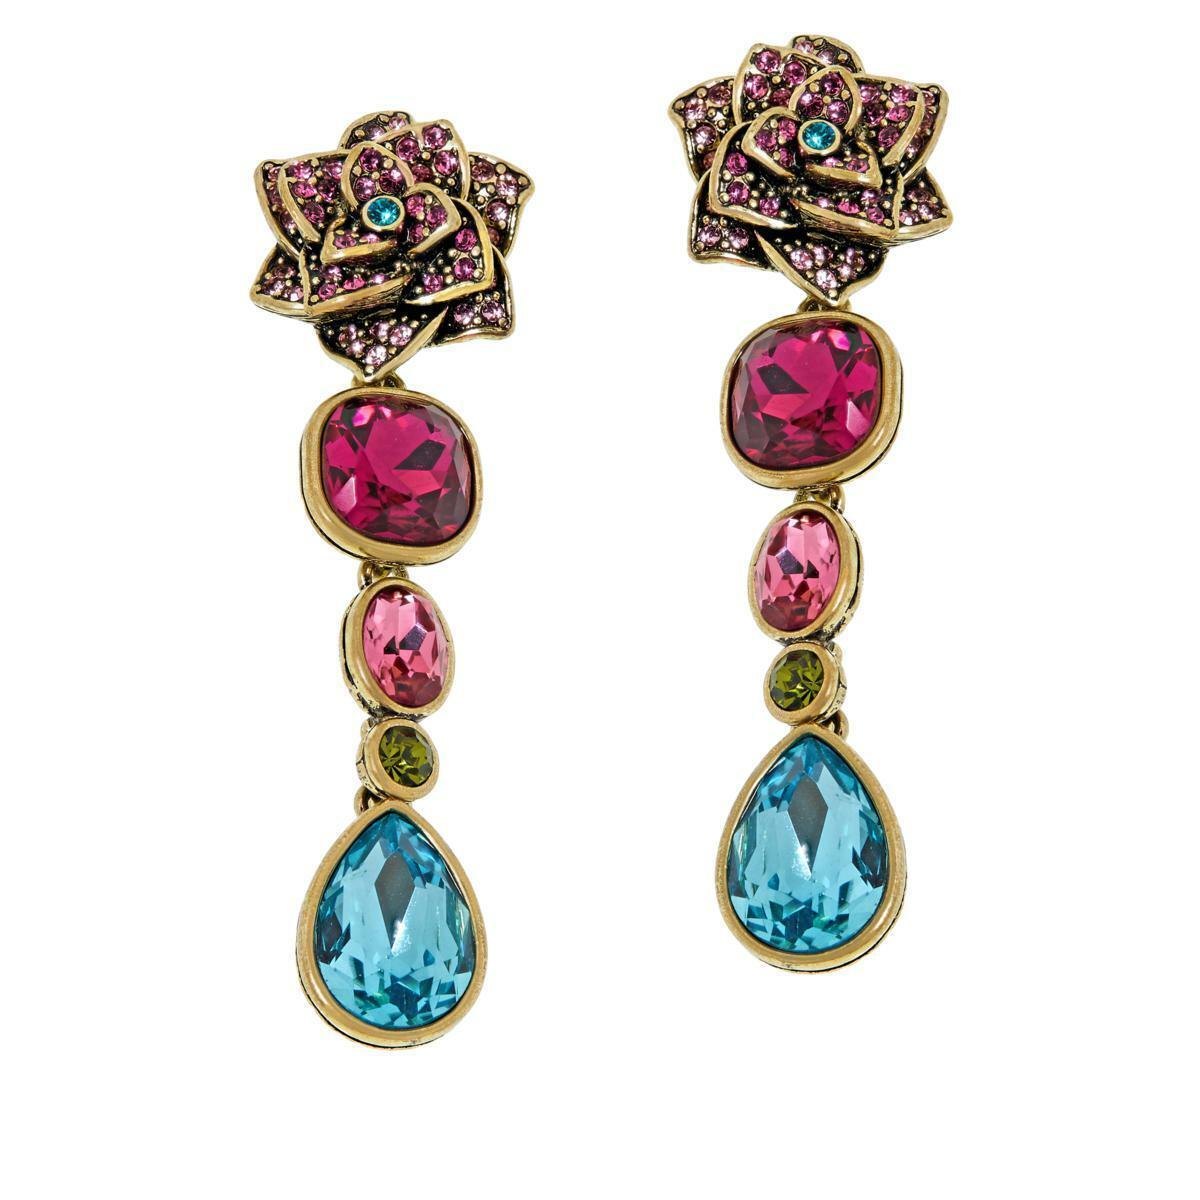 Heidi Daus "Dripping with Gems" Floral Dangle Earrings - $37.39